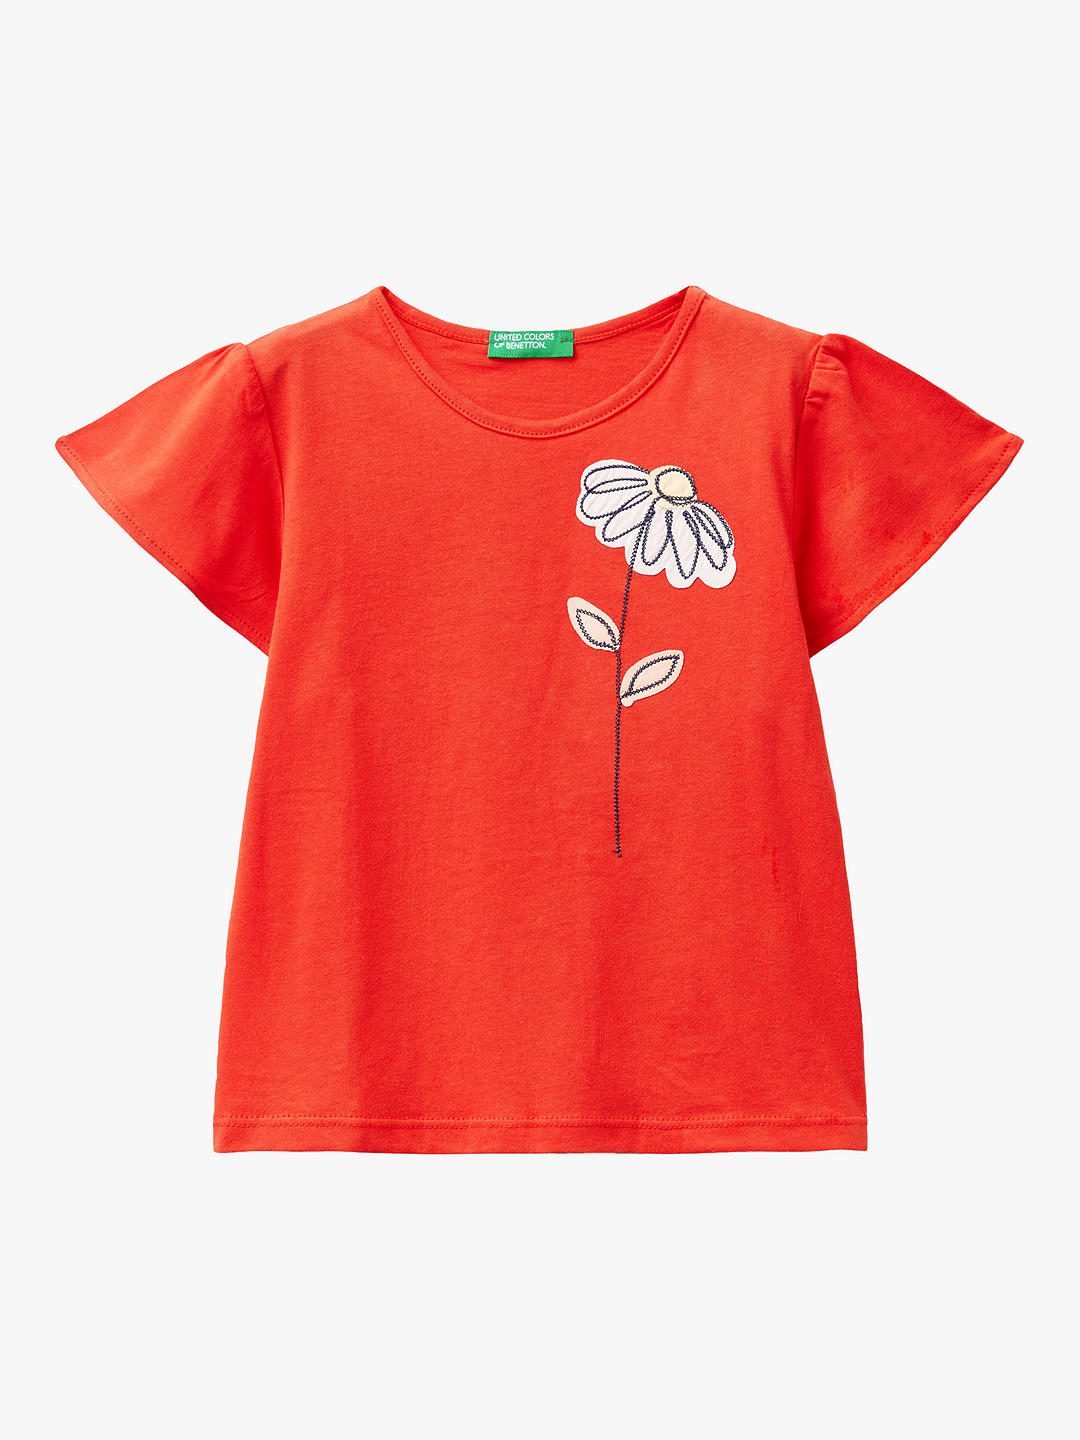 Benetton Kids' Flower Bell Sleeve T-Shirt, Bright Red